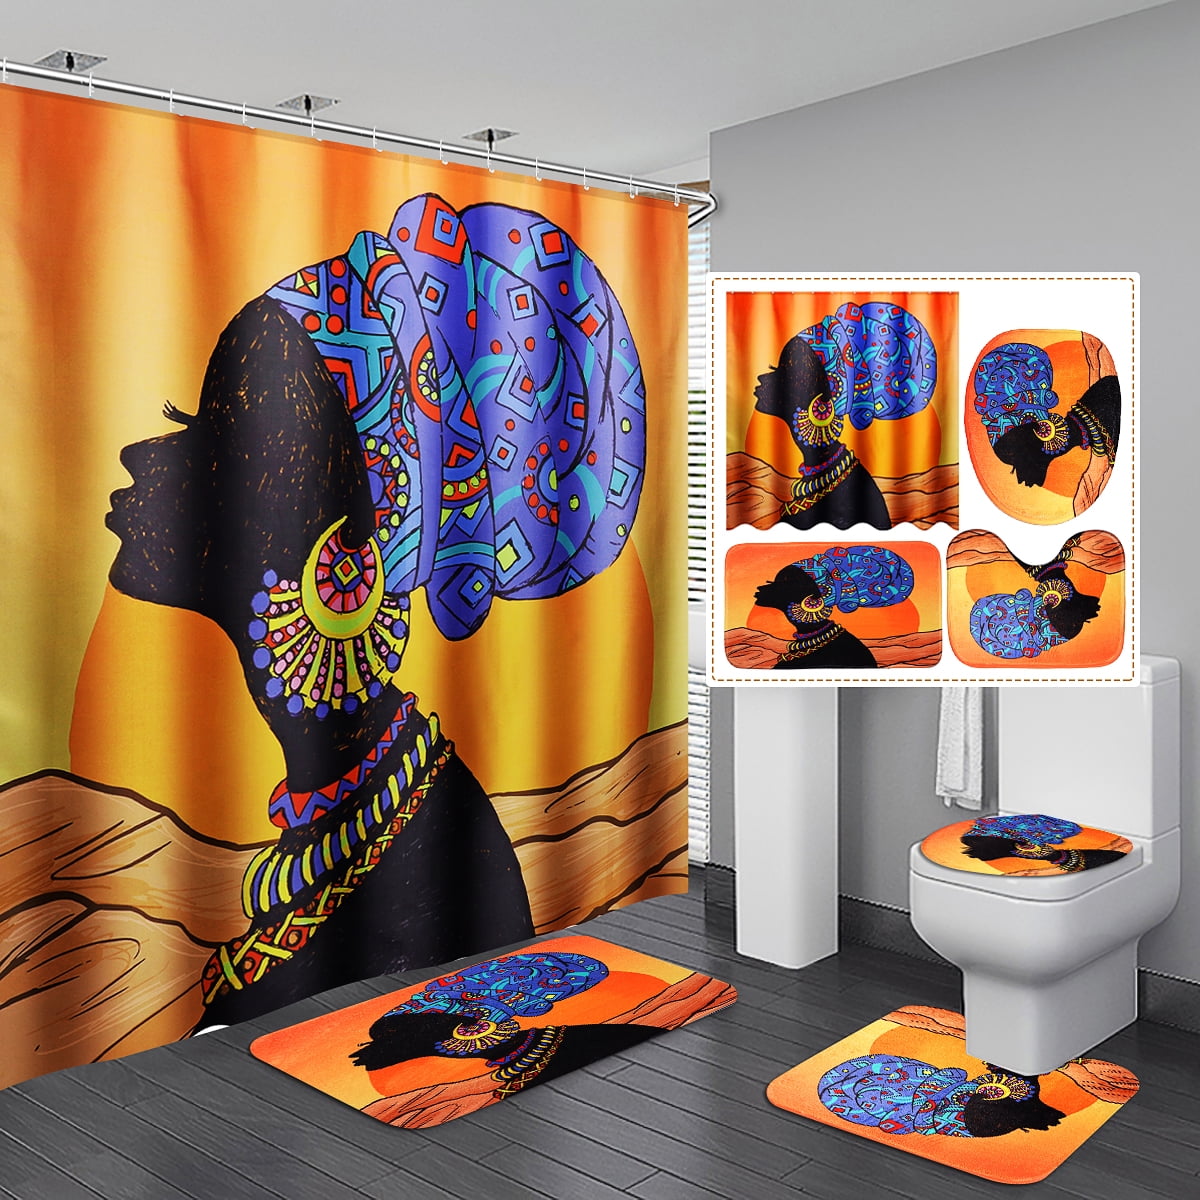 Details about   African Woman Art Print Shower Curtain Bath Mat Toilet Cover Rug Bathroom Decor 